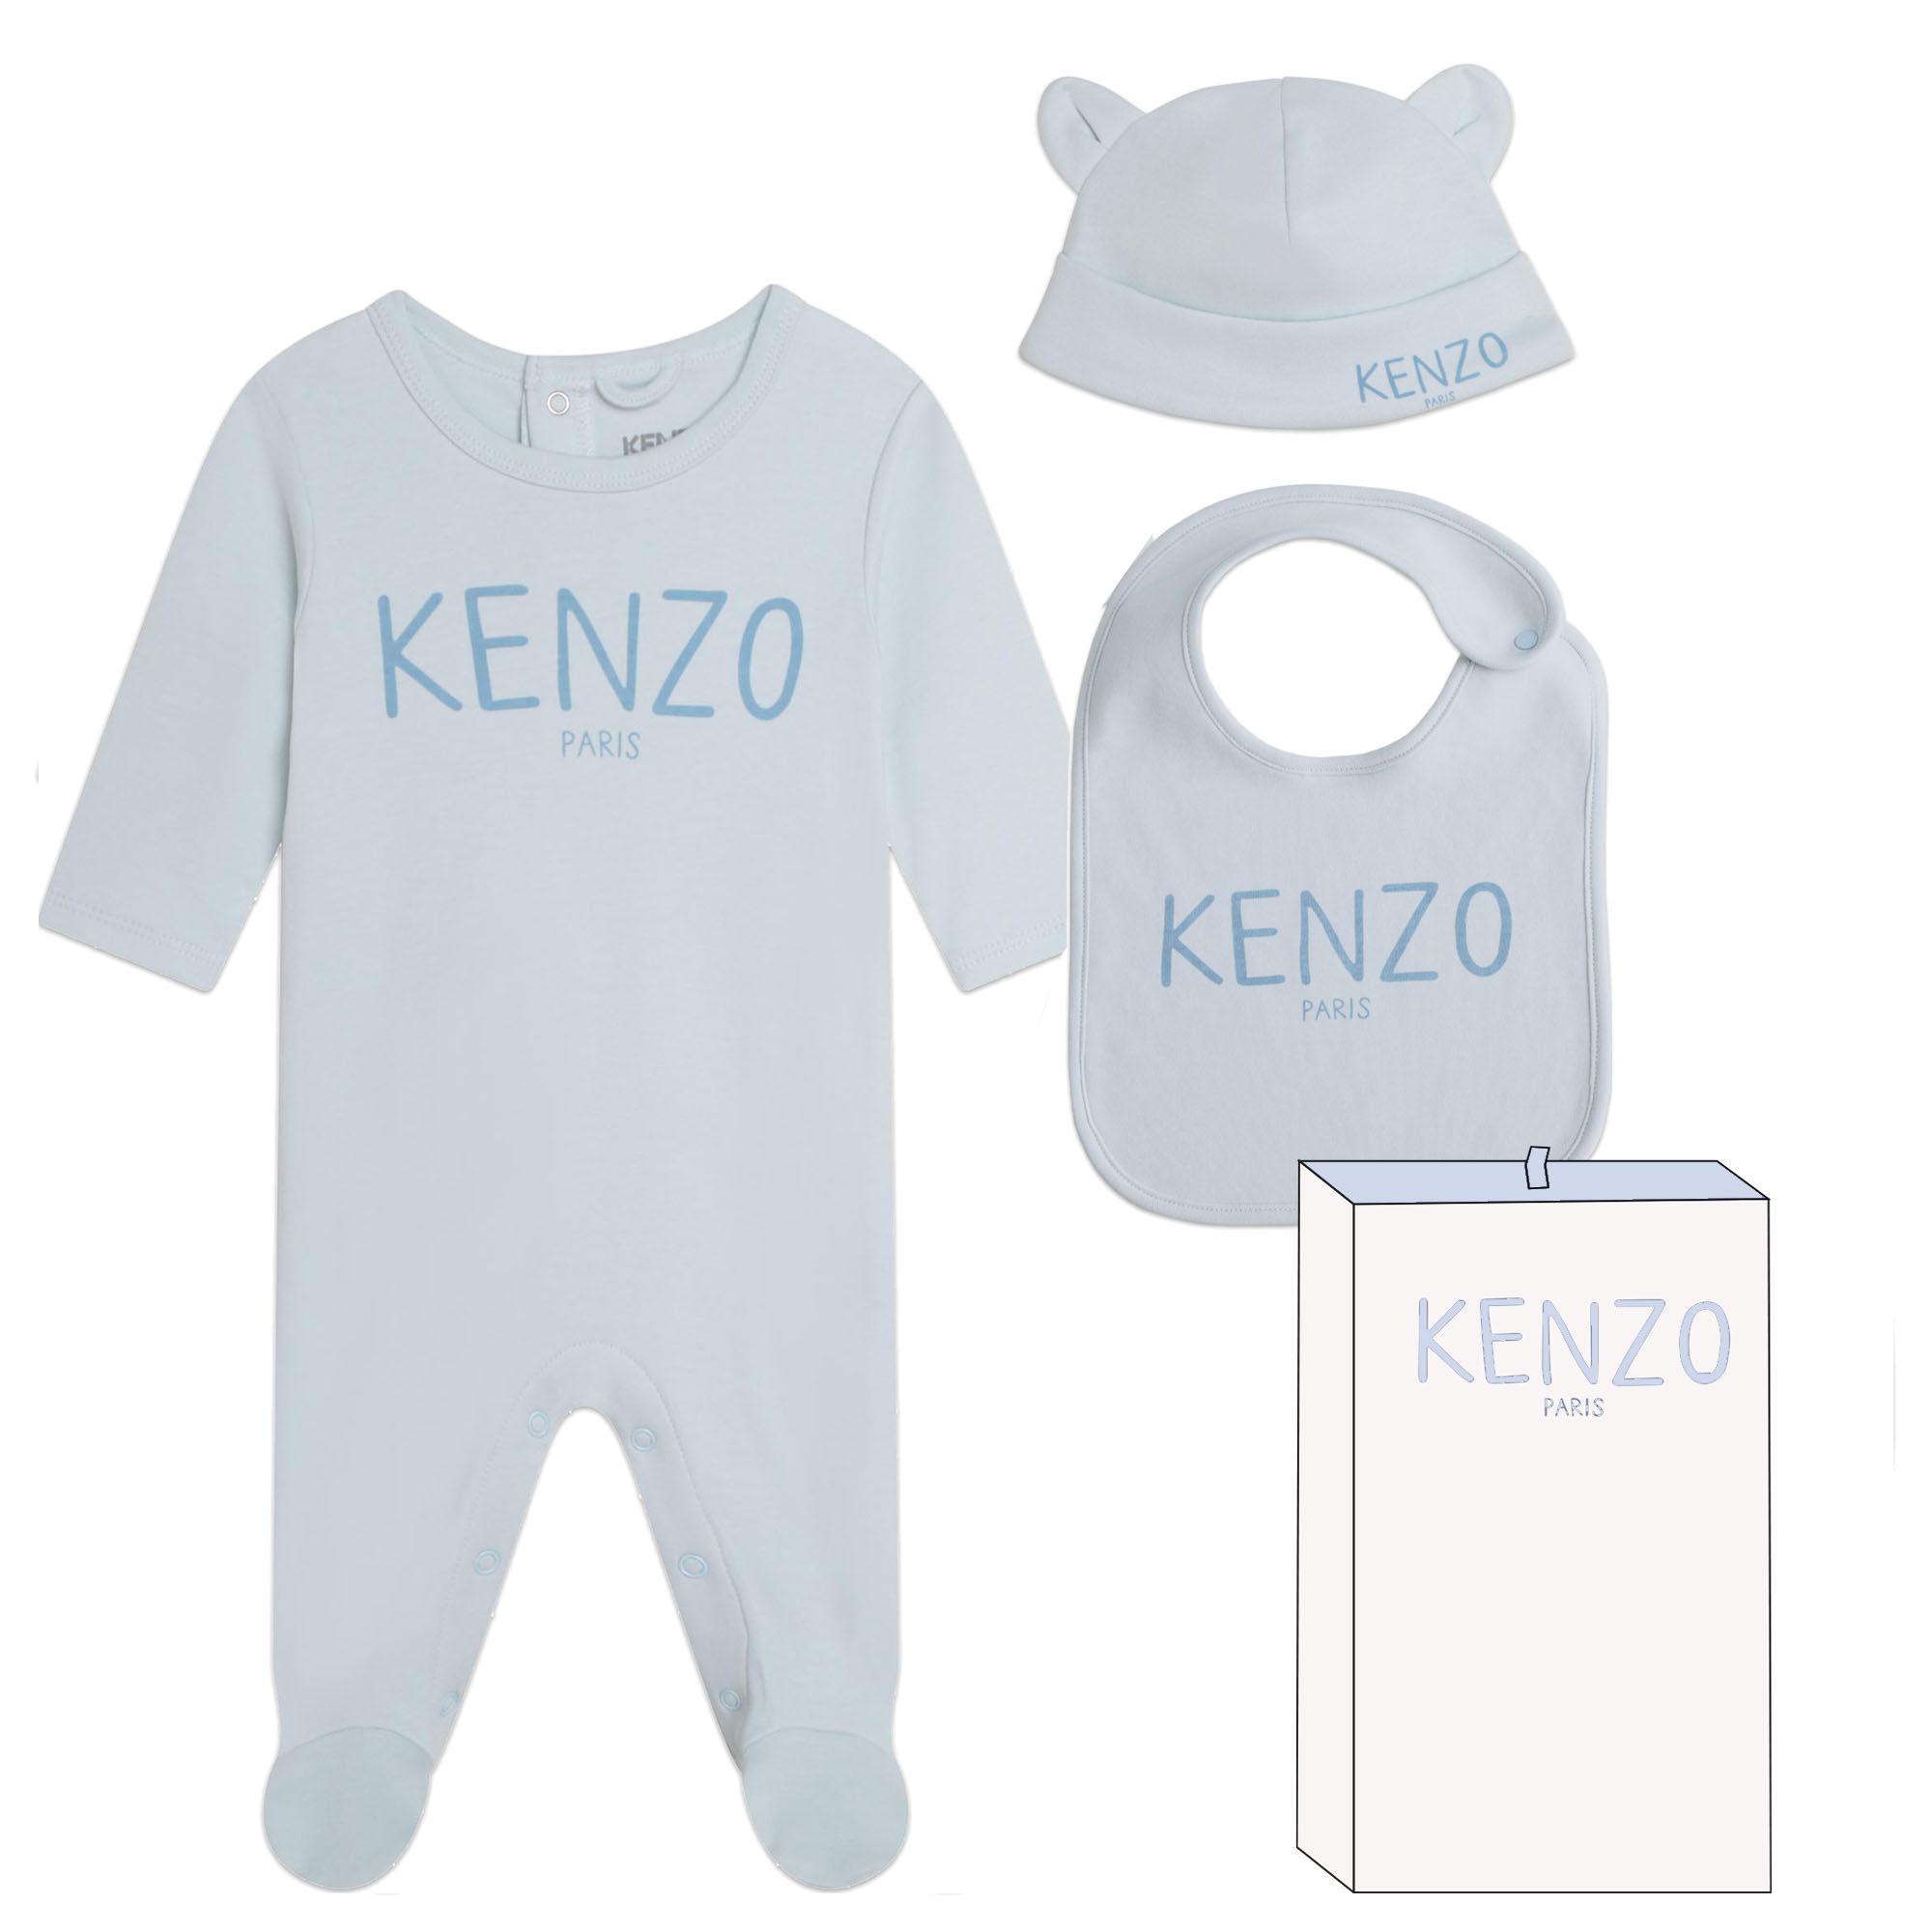 kenzo kids pyjama bonnet et bavoir coton unisexe 12m bleu